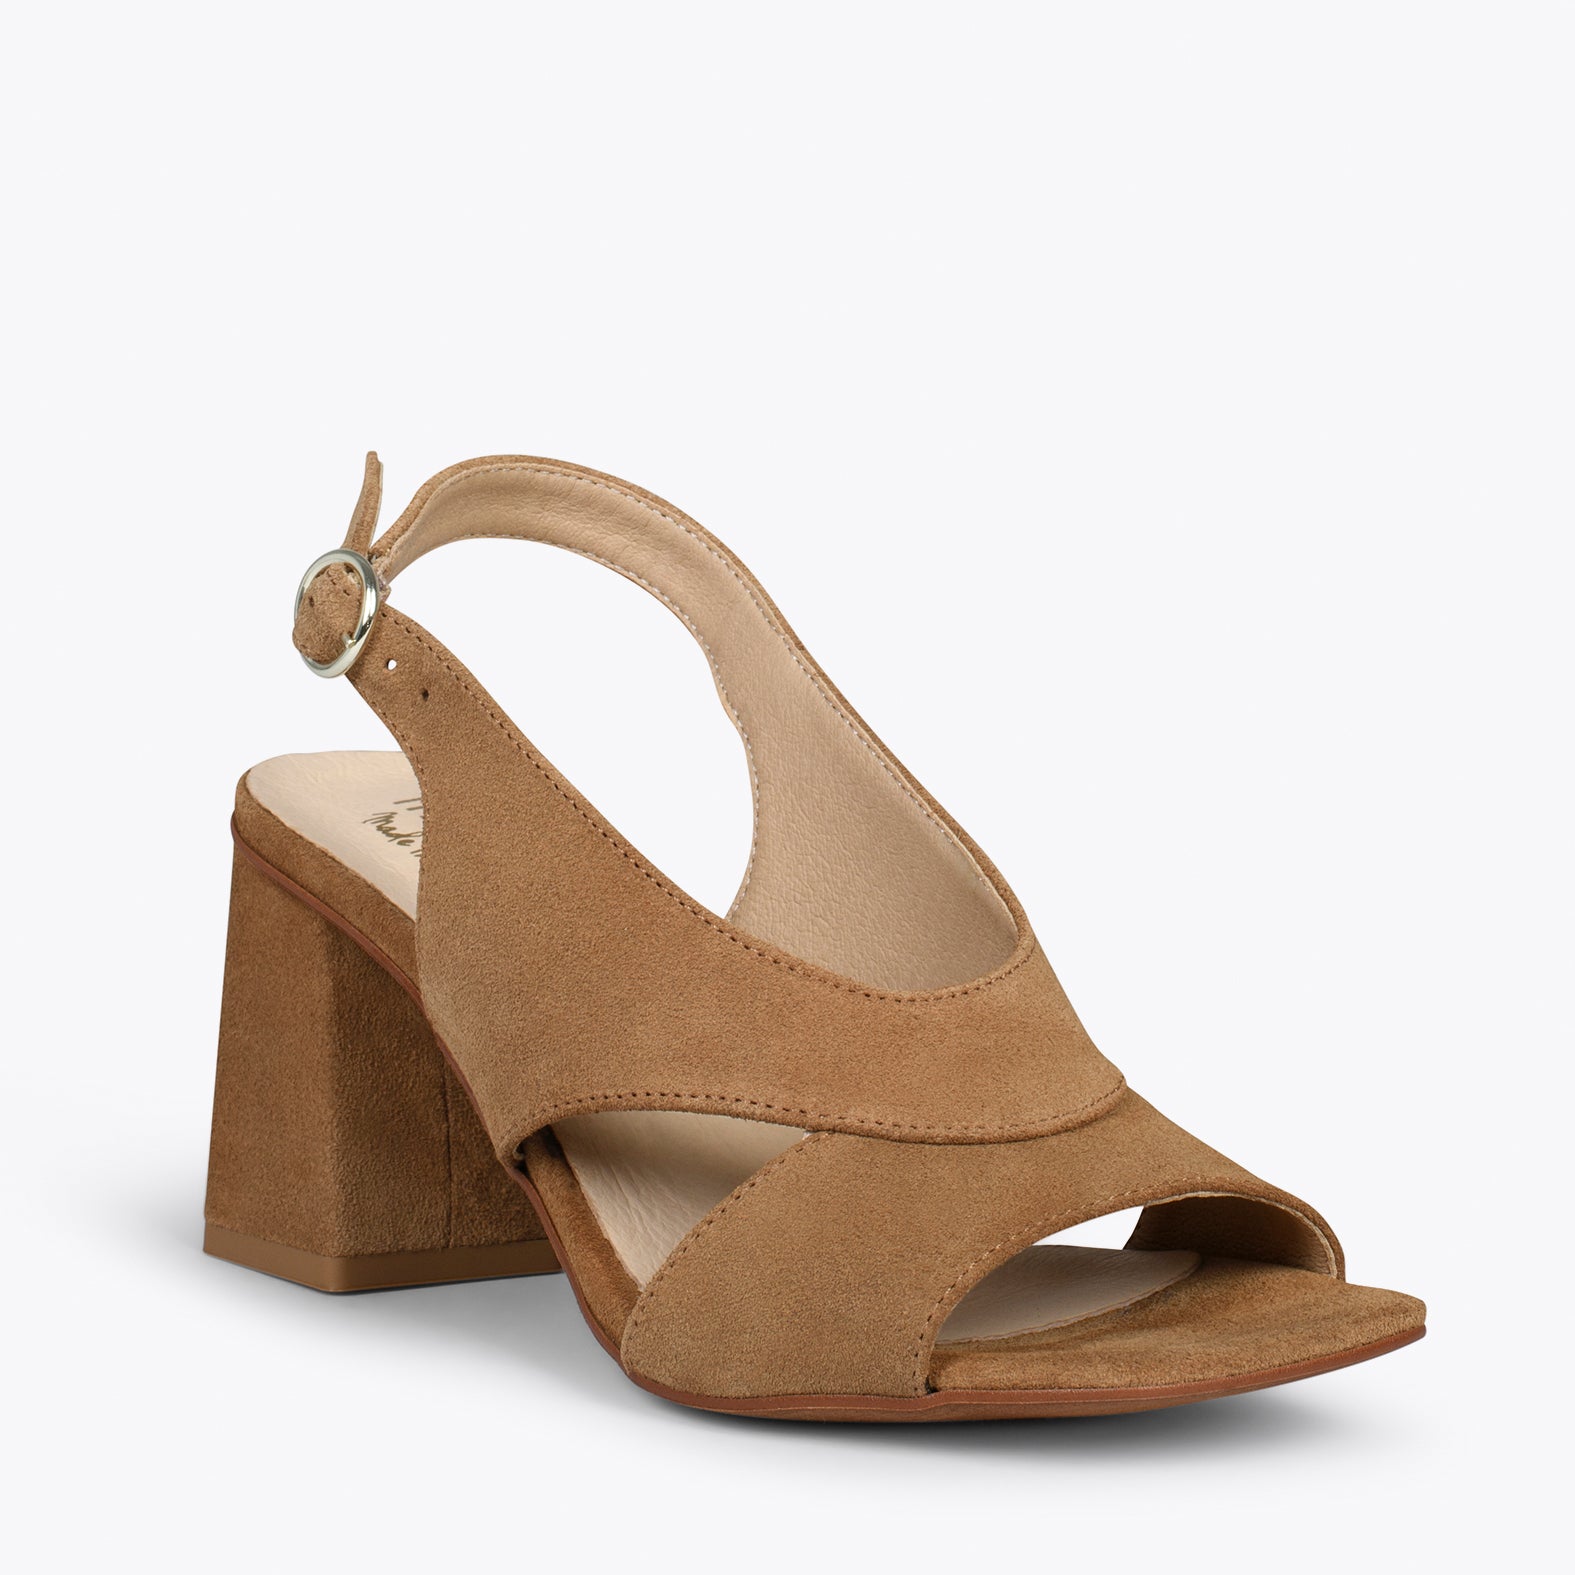 BLOCK – CAMEL sling-back sandals with block heel